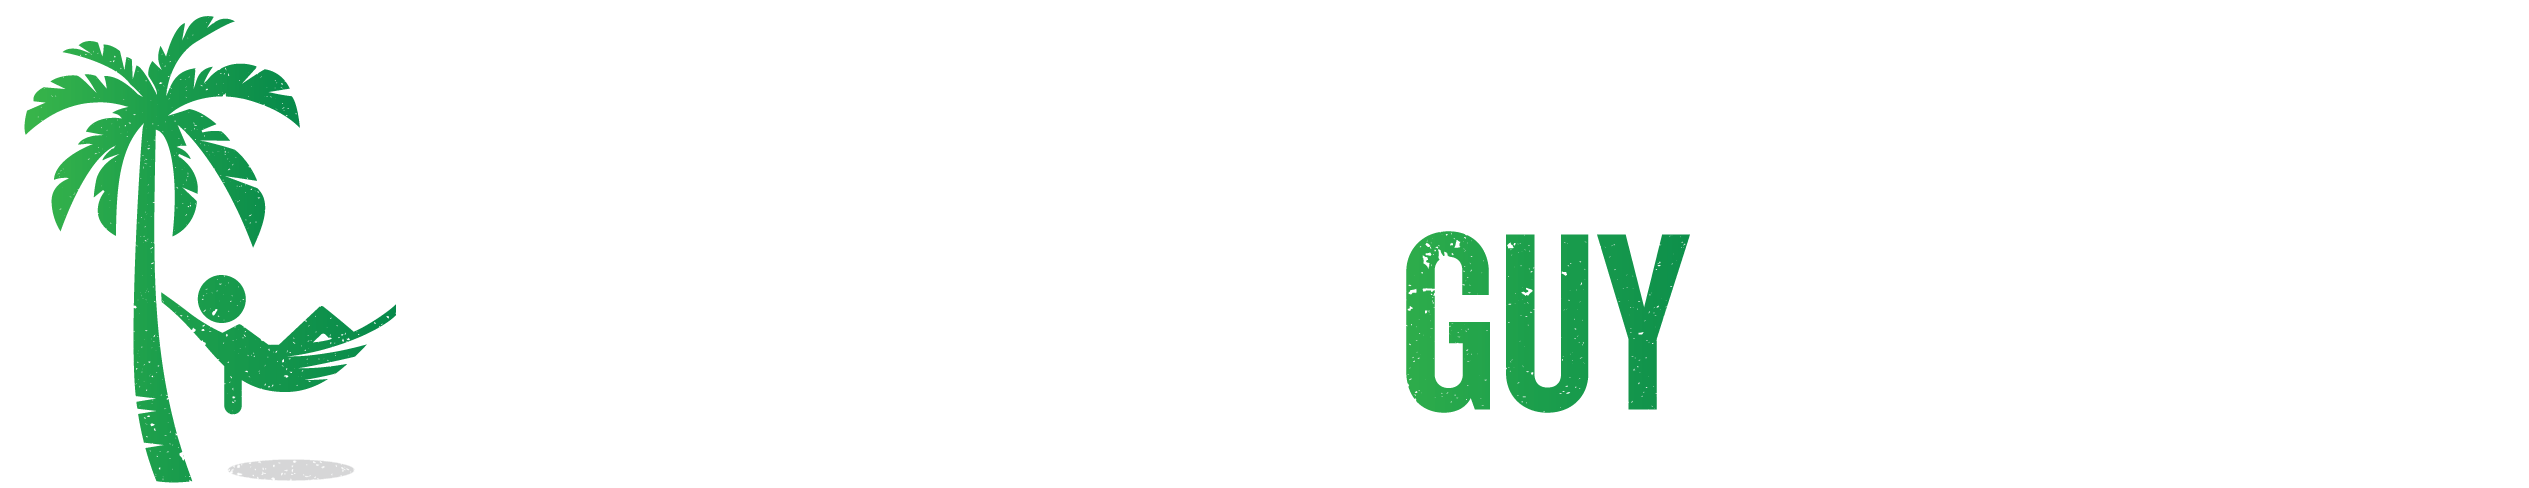 The Dividend Guy Blog